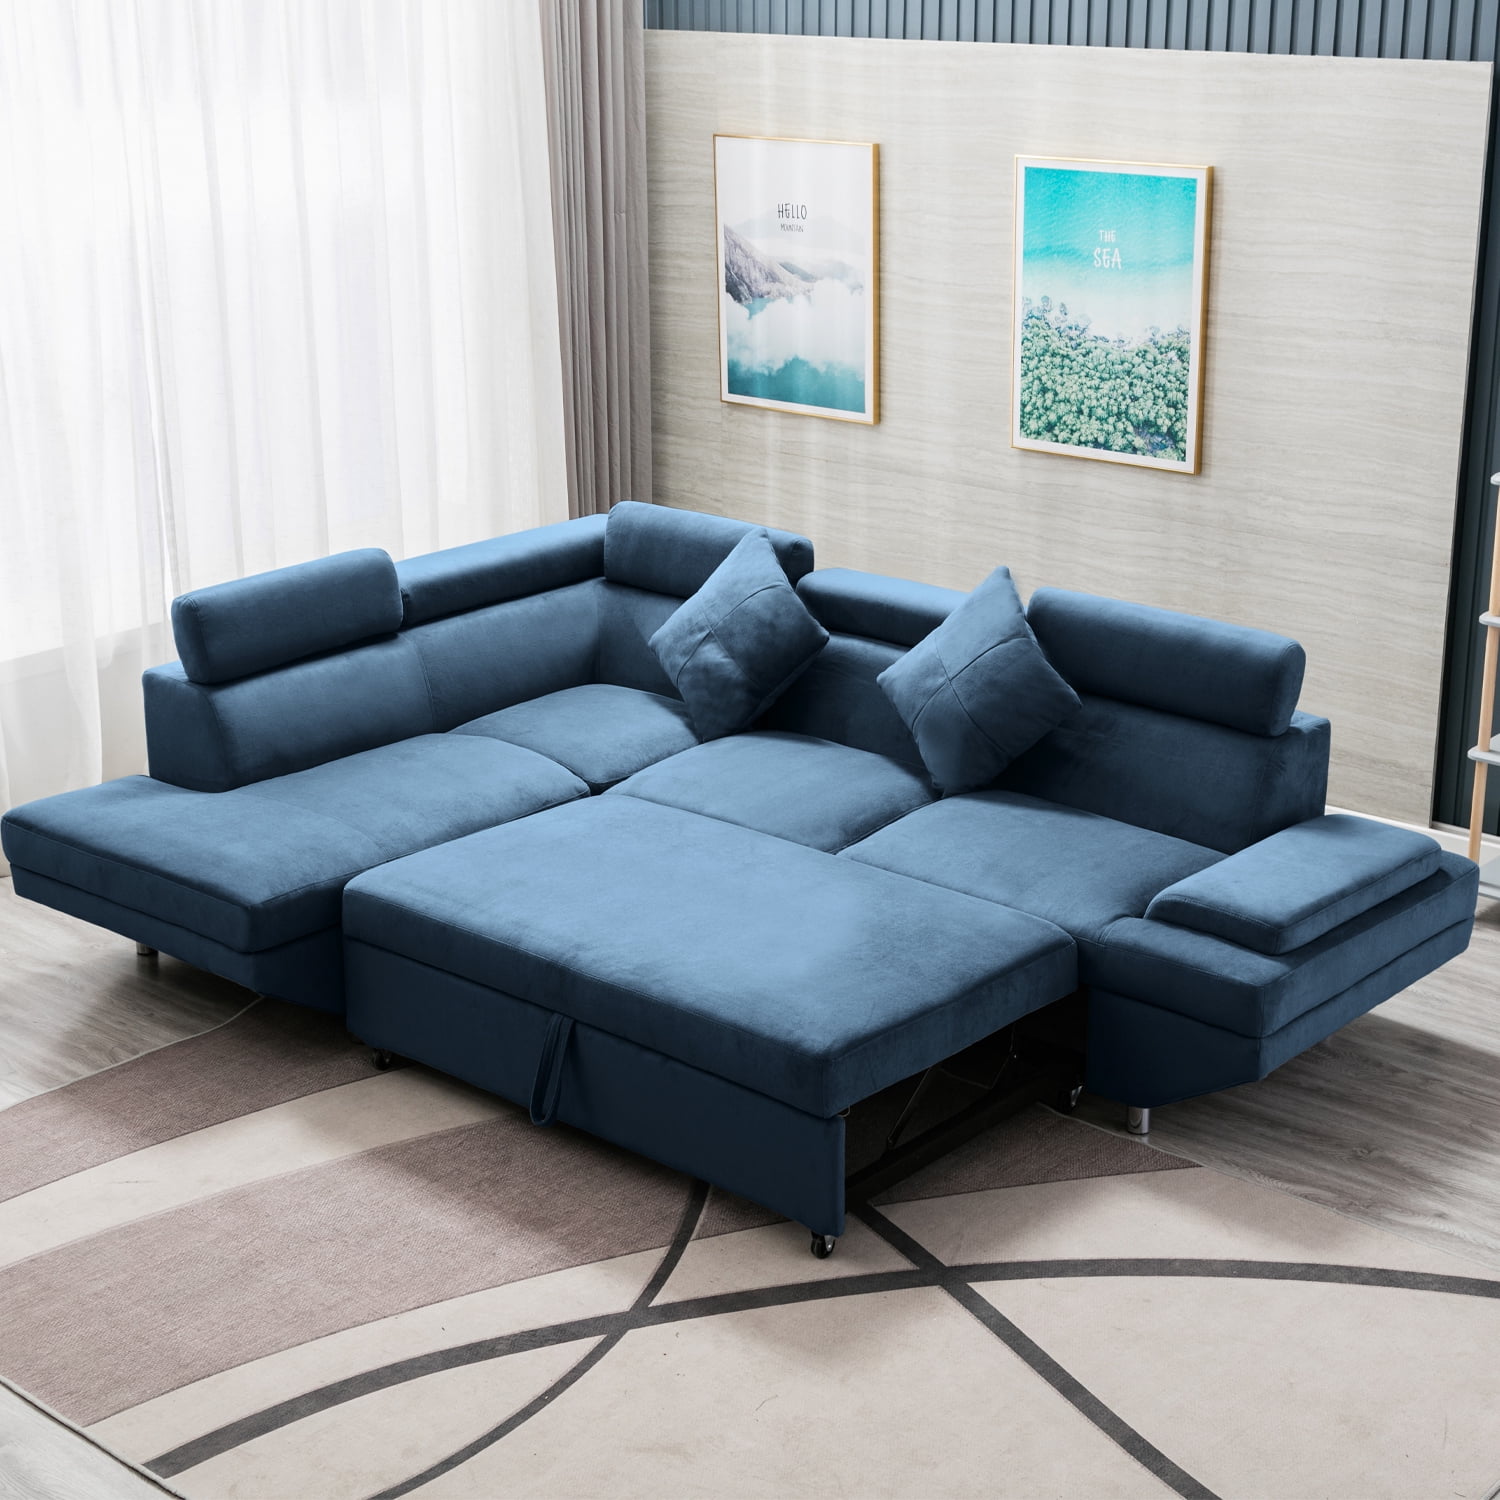 Living Room Sofa موقع العرب, How To Choose A Good Sofa Bed